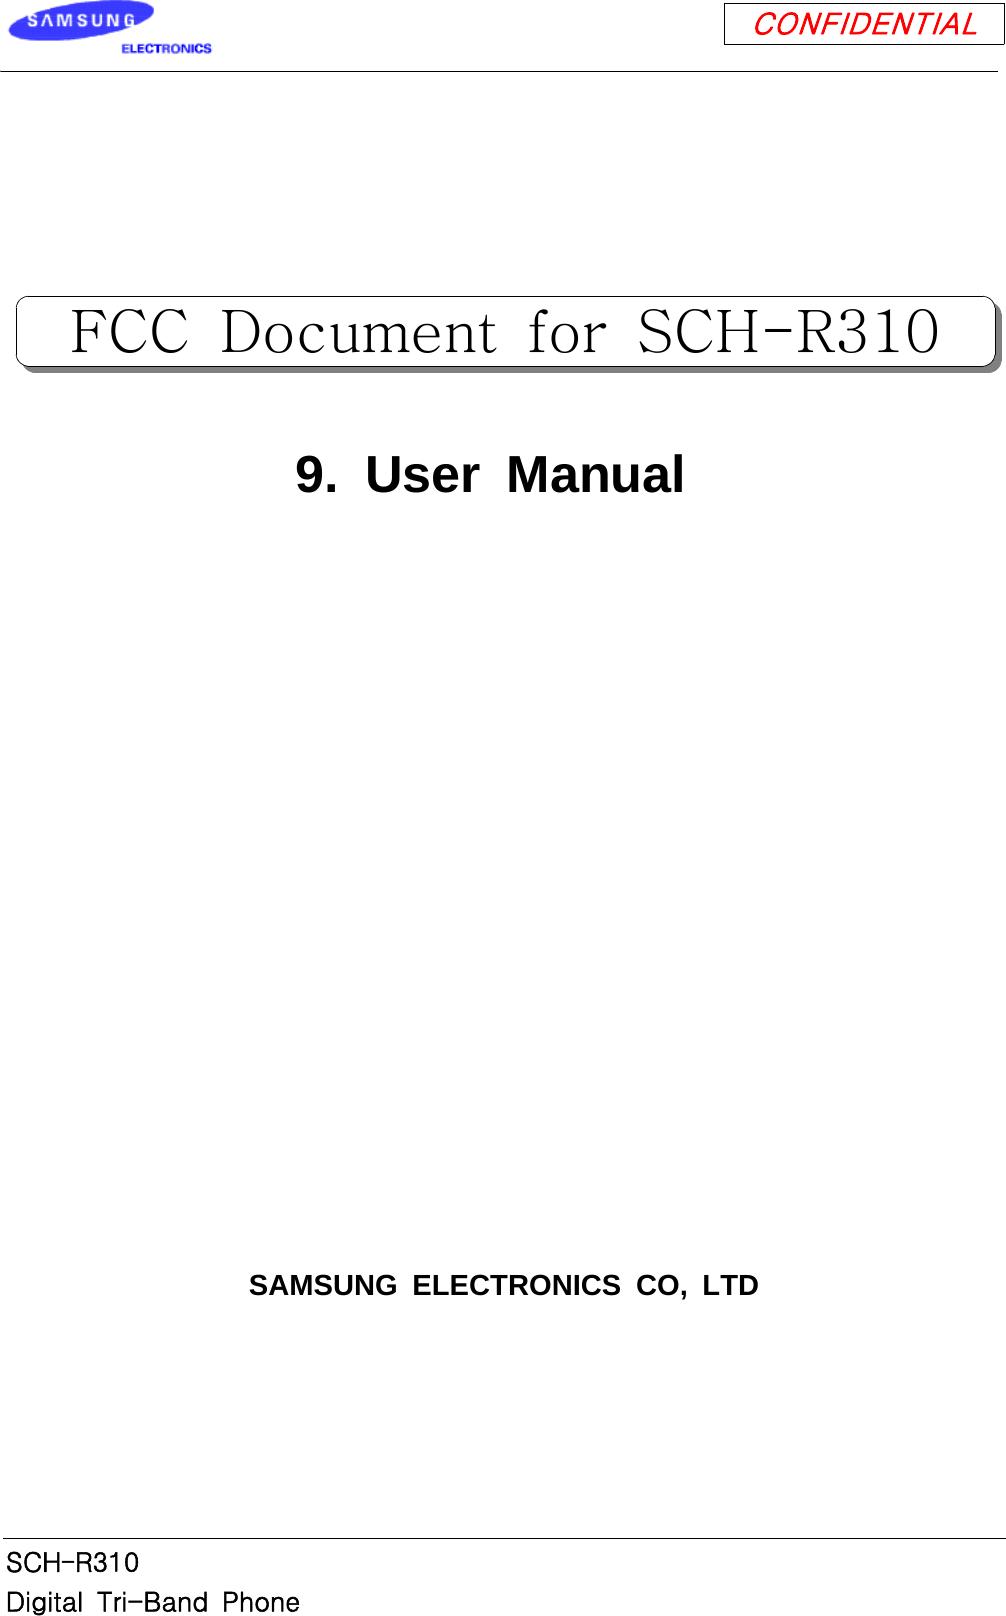 CONFIDENTIALSCH-R310Digital Tri-Band Phone9. User ManualSAMSUNG ELECTRONICS CO, LTDFCC Document for SCH-R310